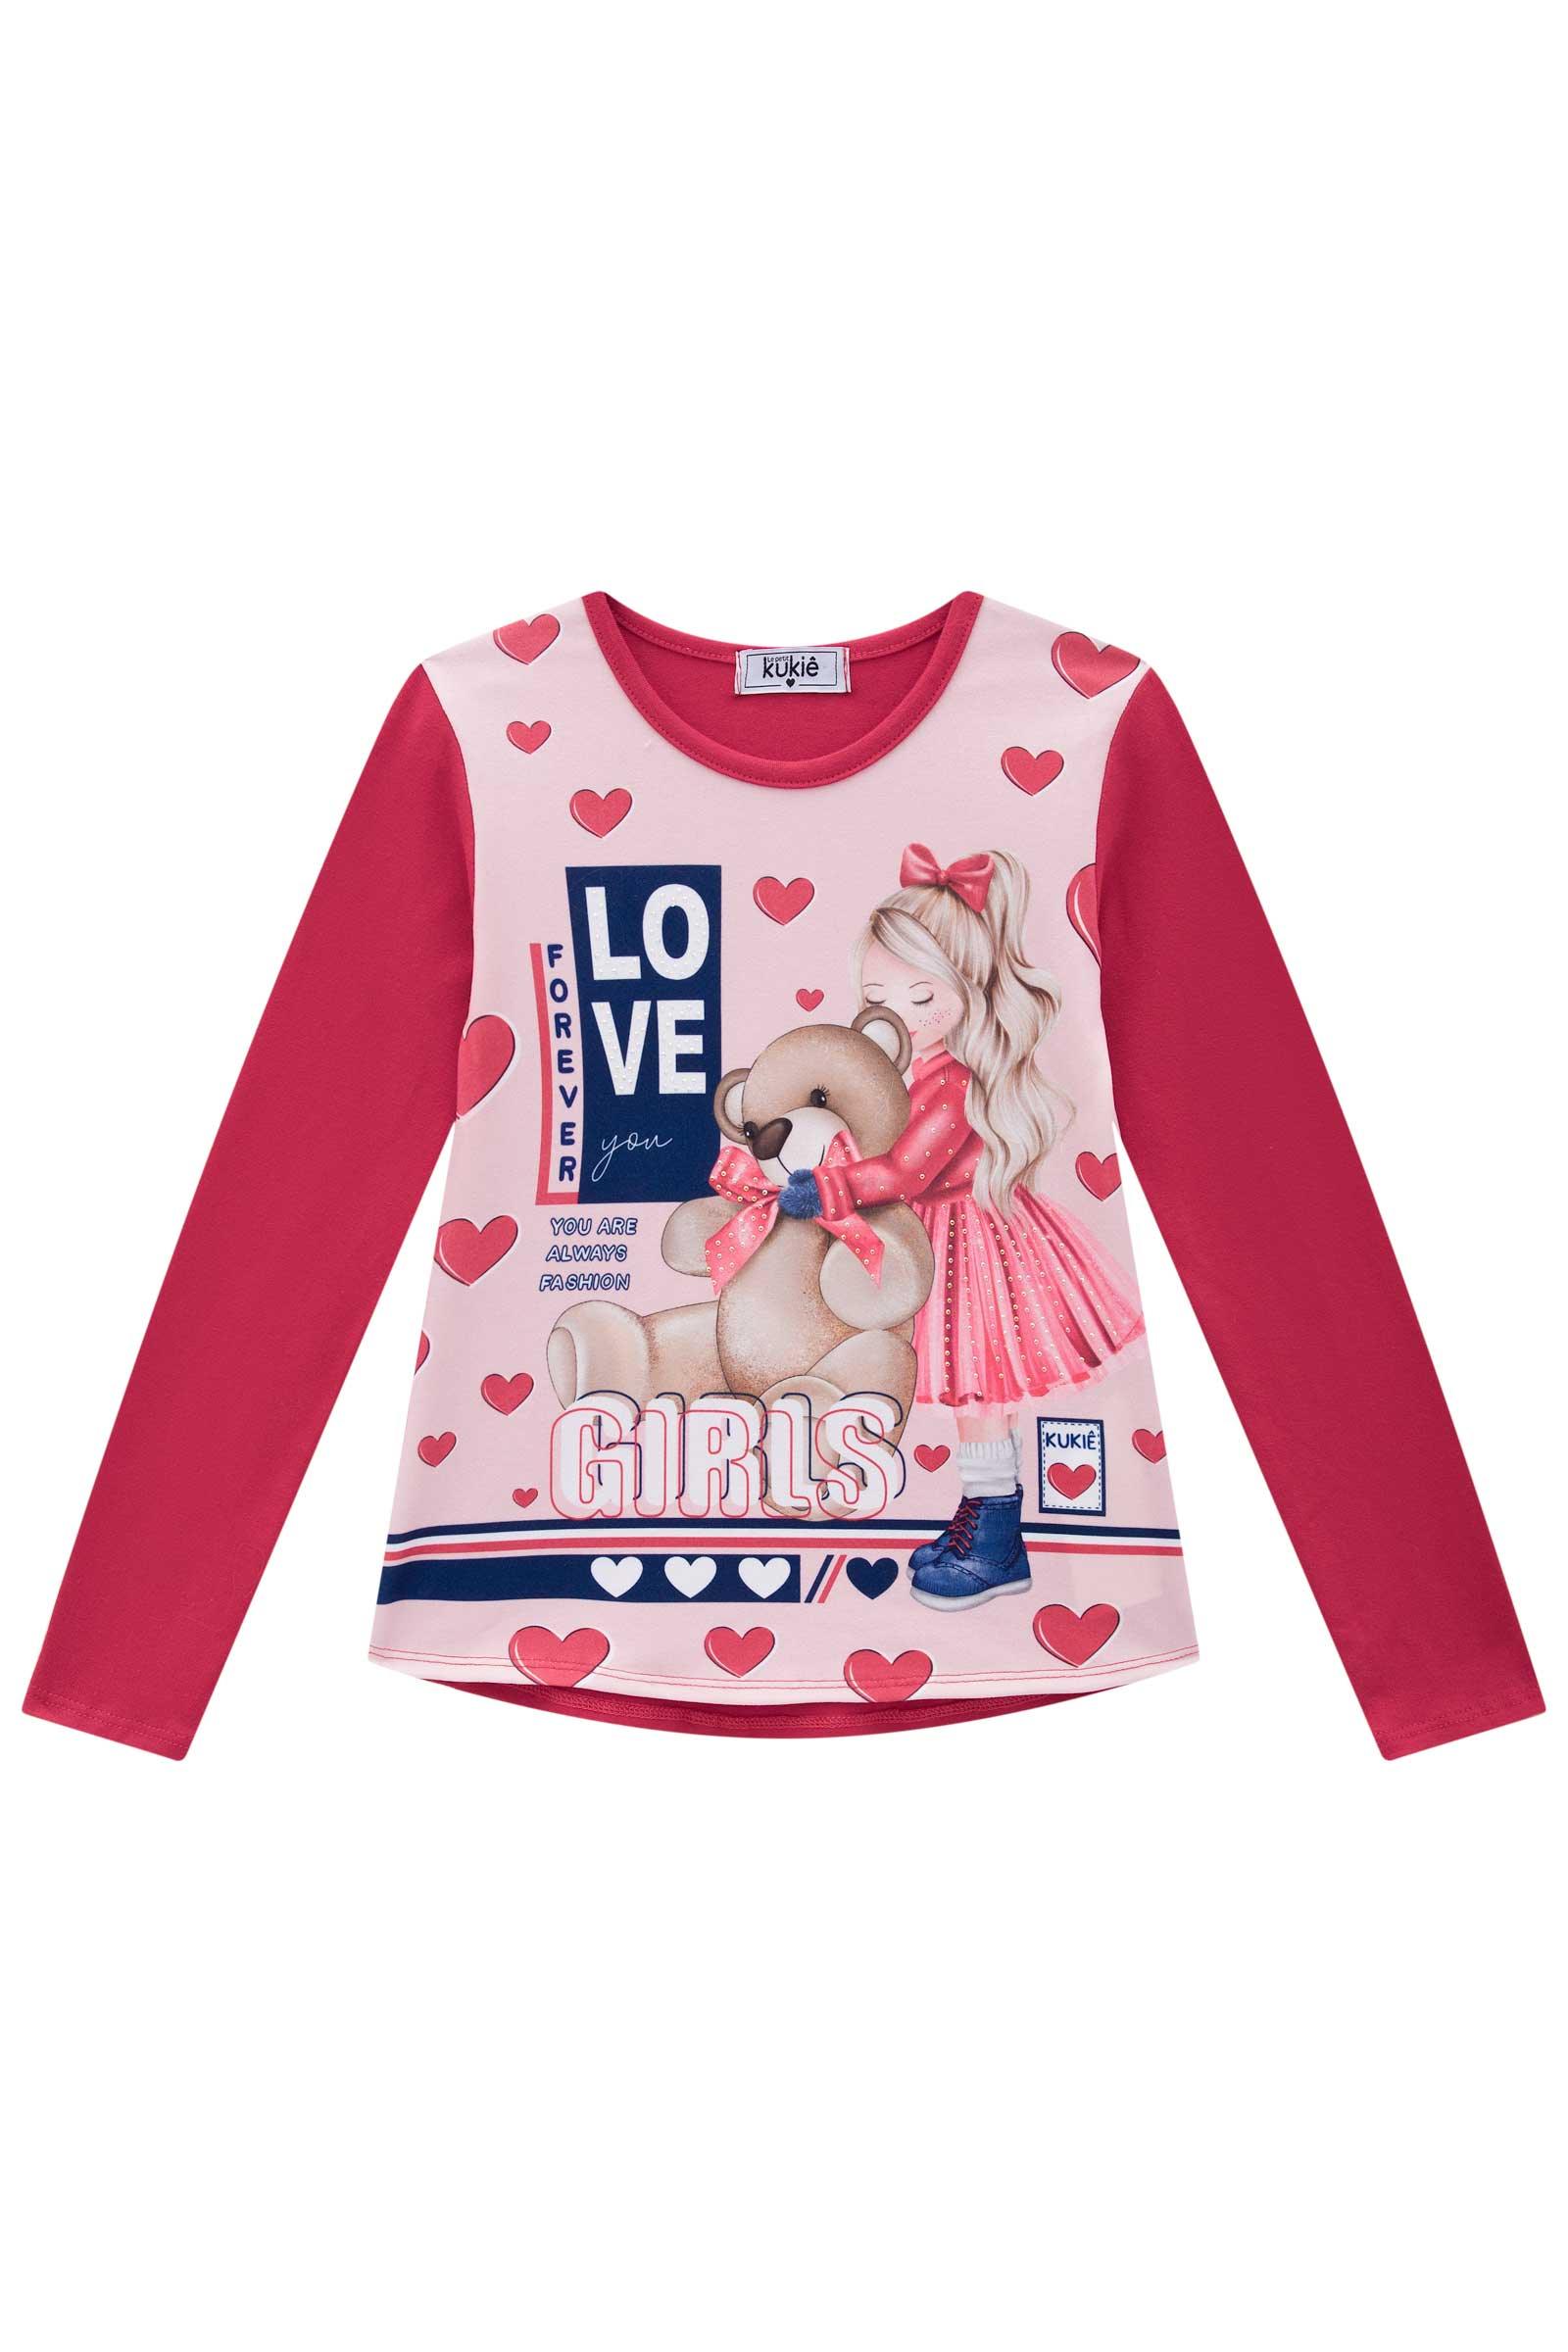 Camiseta Love Forever Girls Kukiê - Arisa Kids